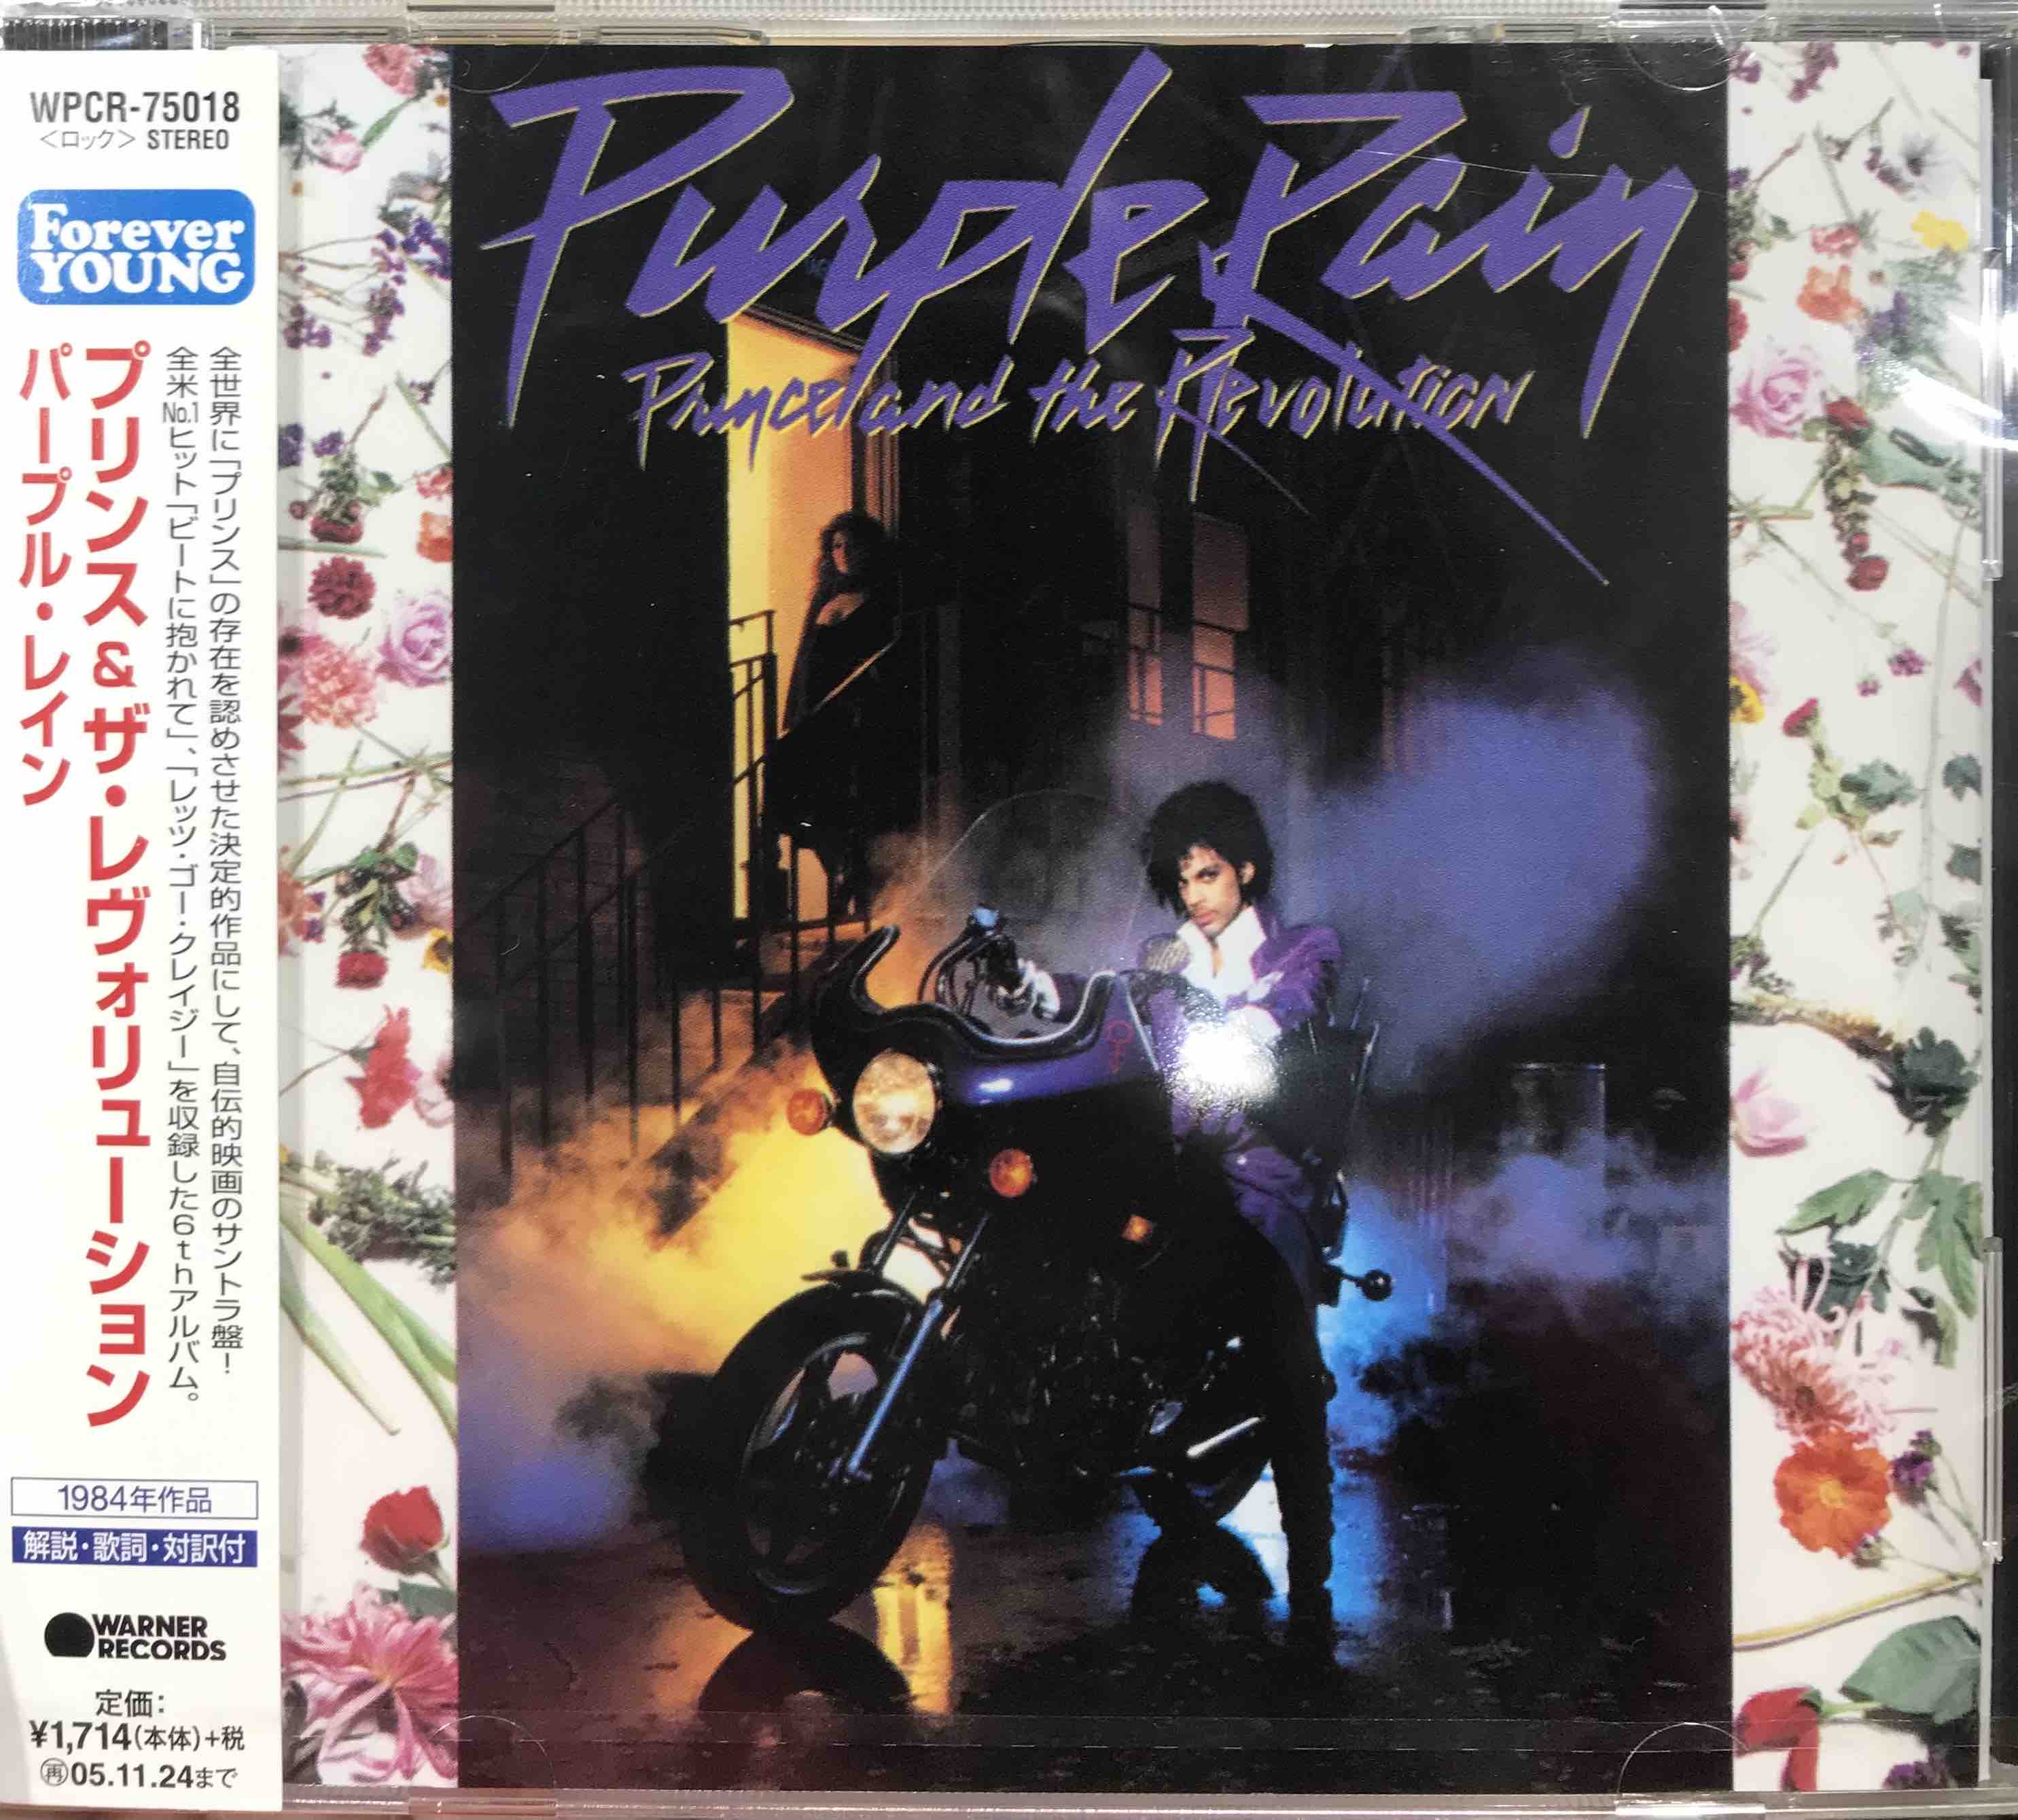 Prince And The Revolution ‎– Purple Rain